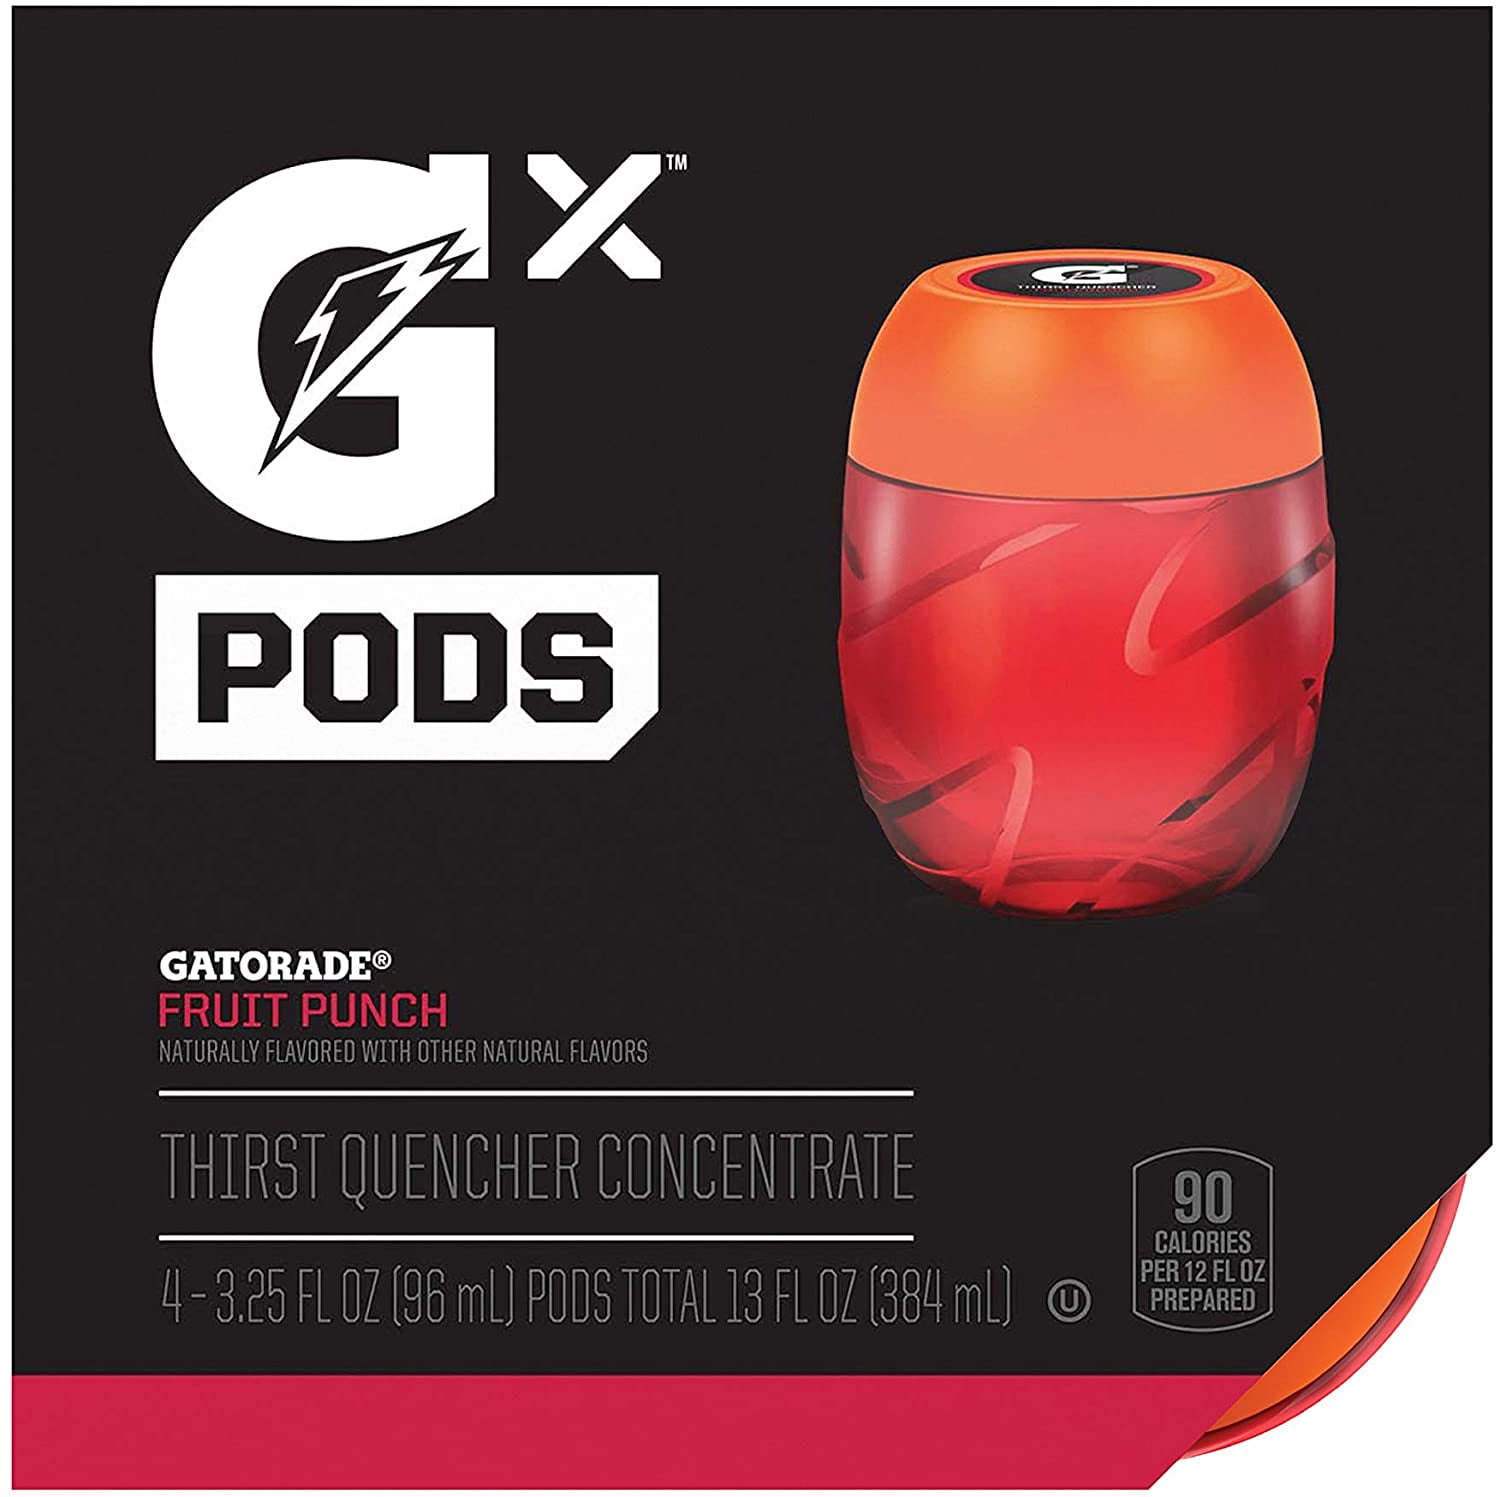 Gatorade GX Pods Fruit Punch 3.25oz Pods 16 Pack 